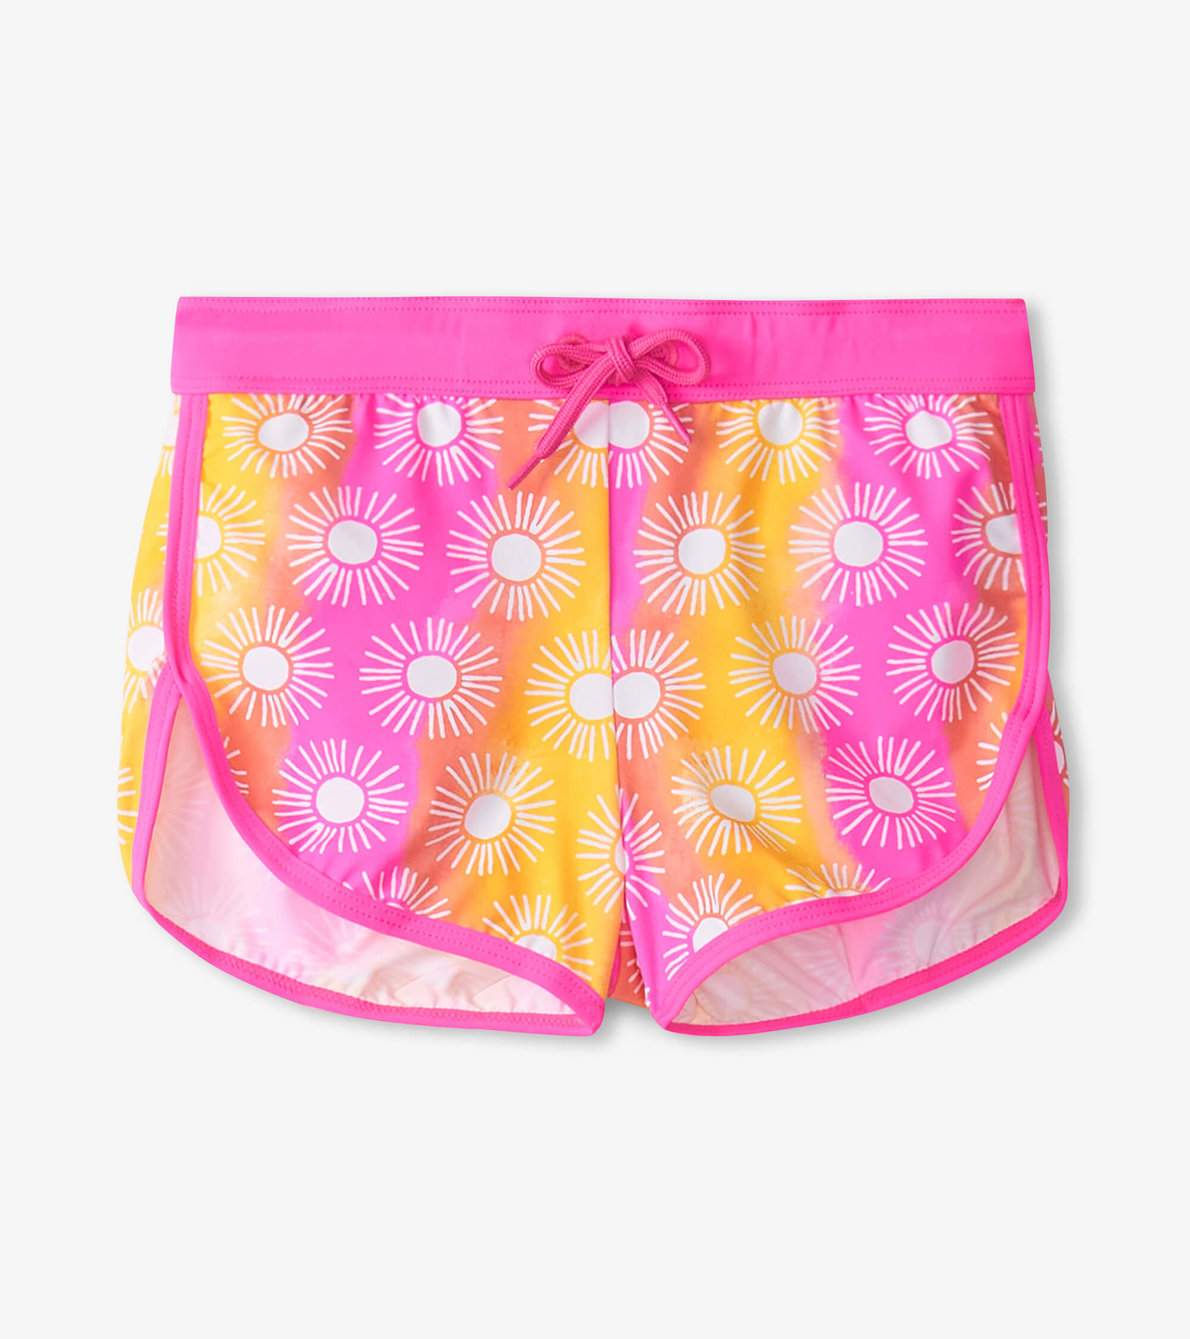 View larger image of Girls Sunshine Swim Shorts